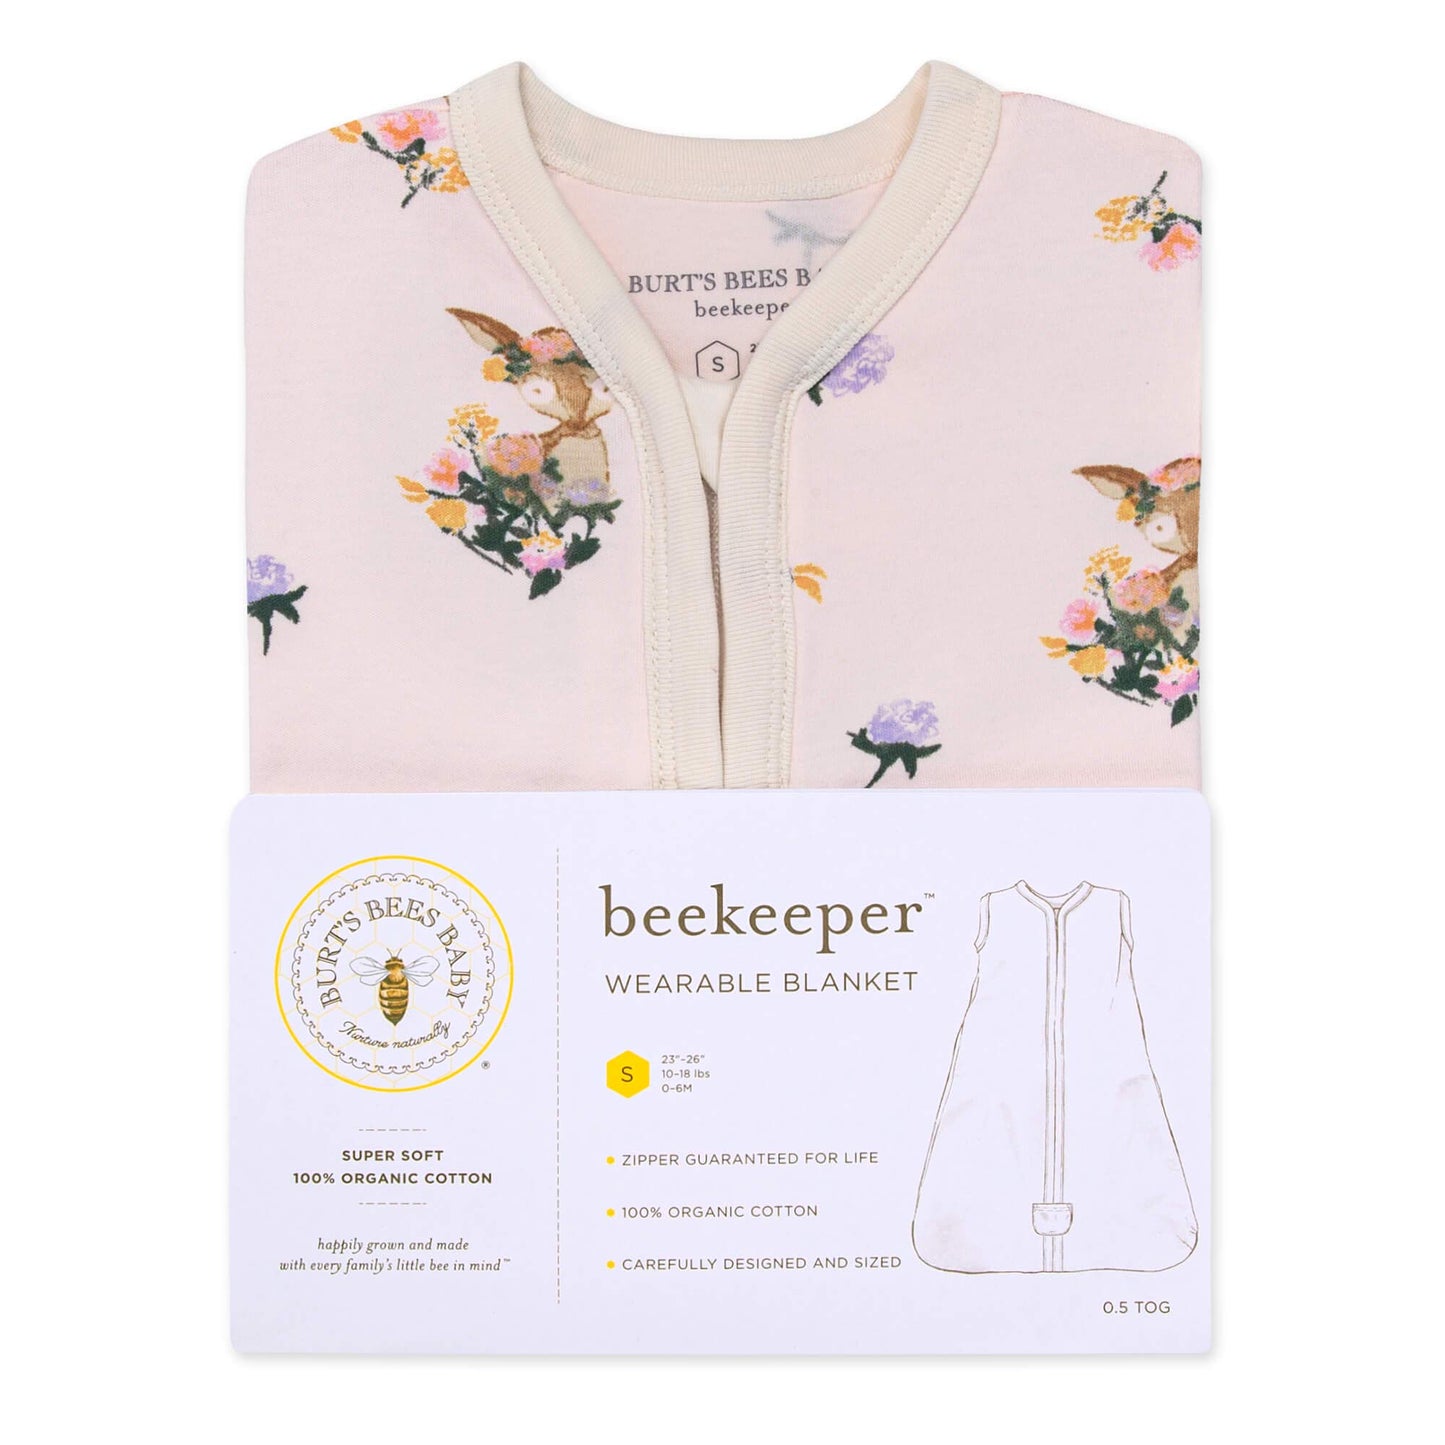 Burt's Bees Baby unisex baby Beekeeper Blanket, 100% Organic Cotton, Swaddle Transition Sleeping Bag Wearable Blanket, Sweet Doe, Small US